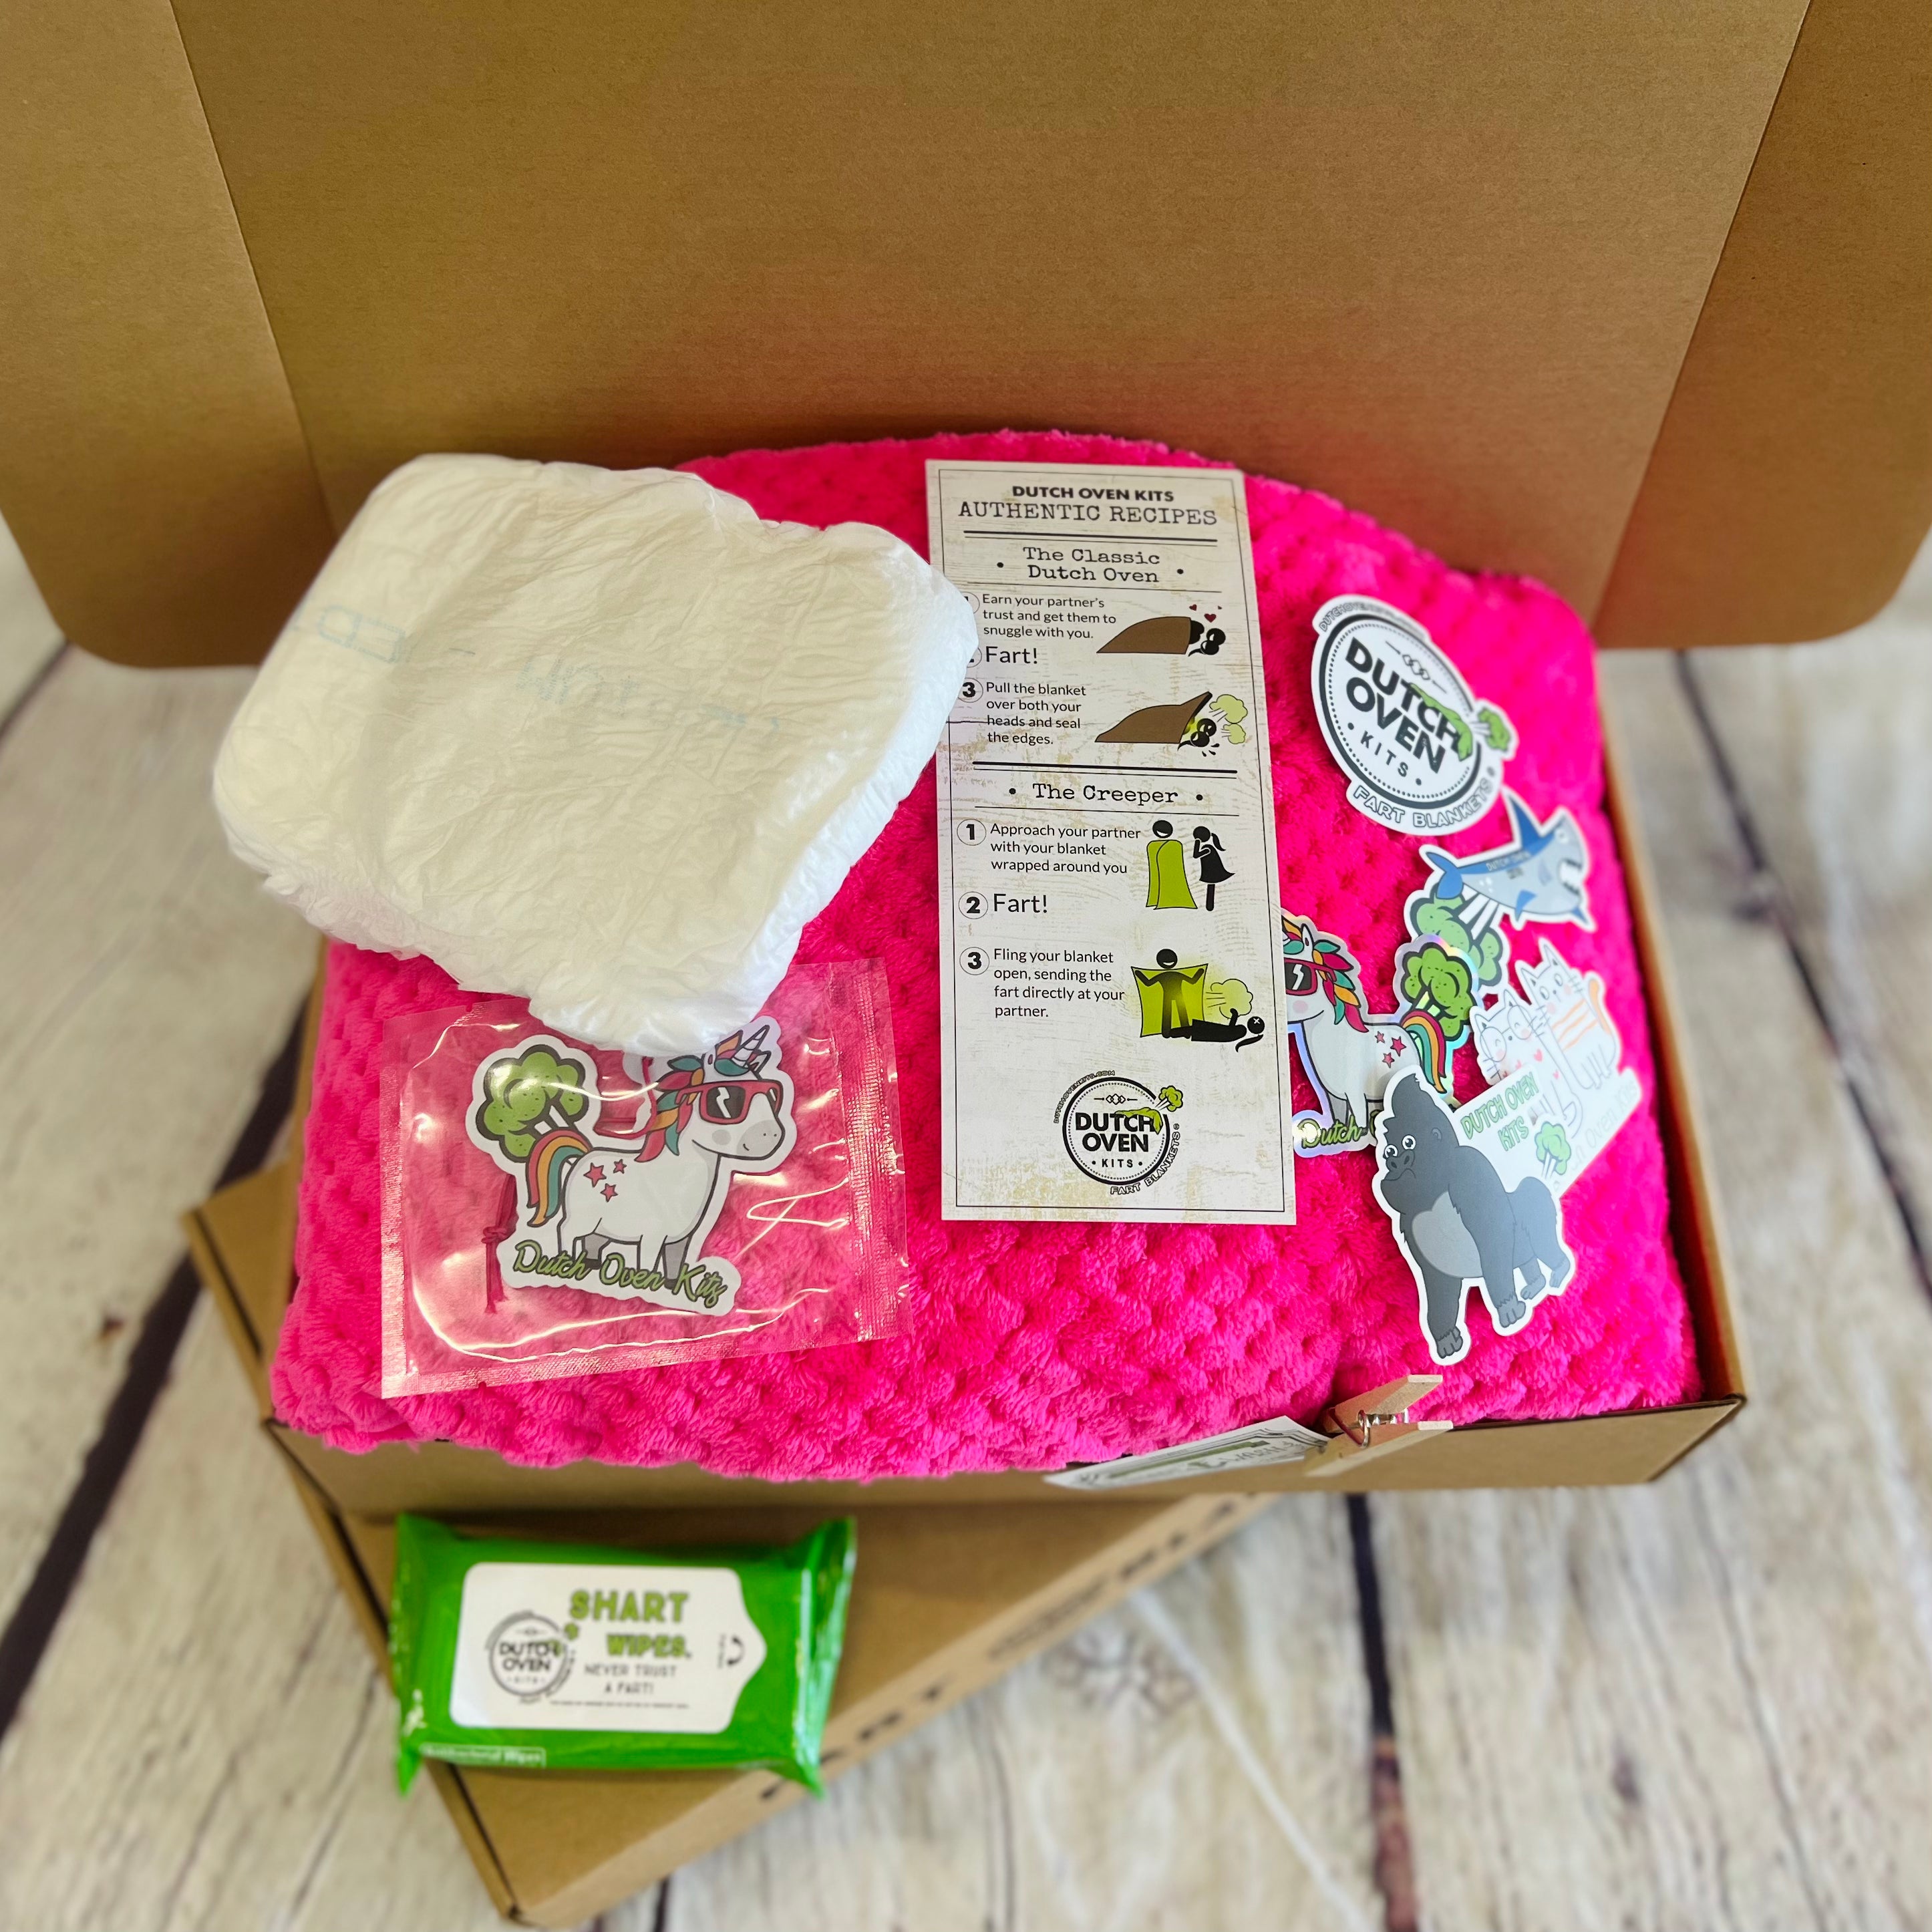 Deluxe Dutch Oven Kit Gift Box